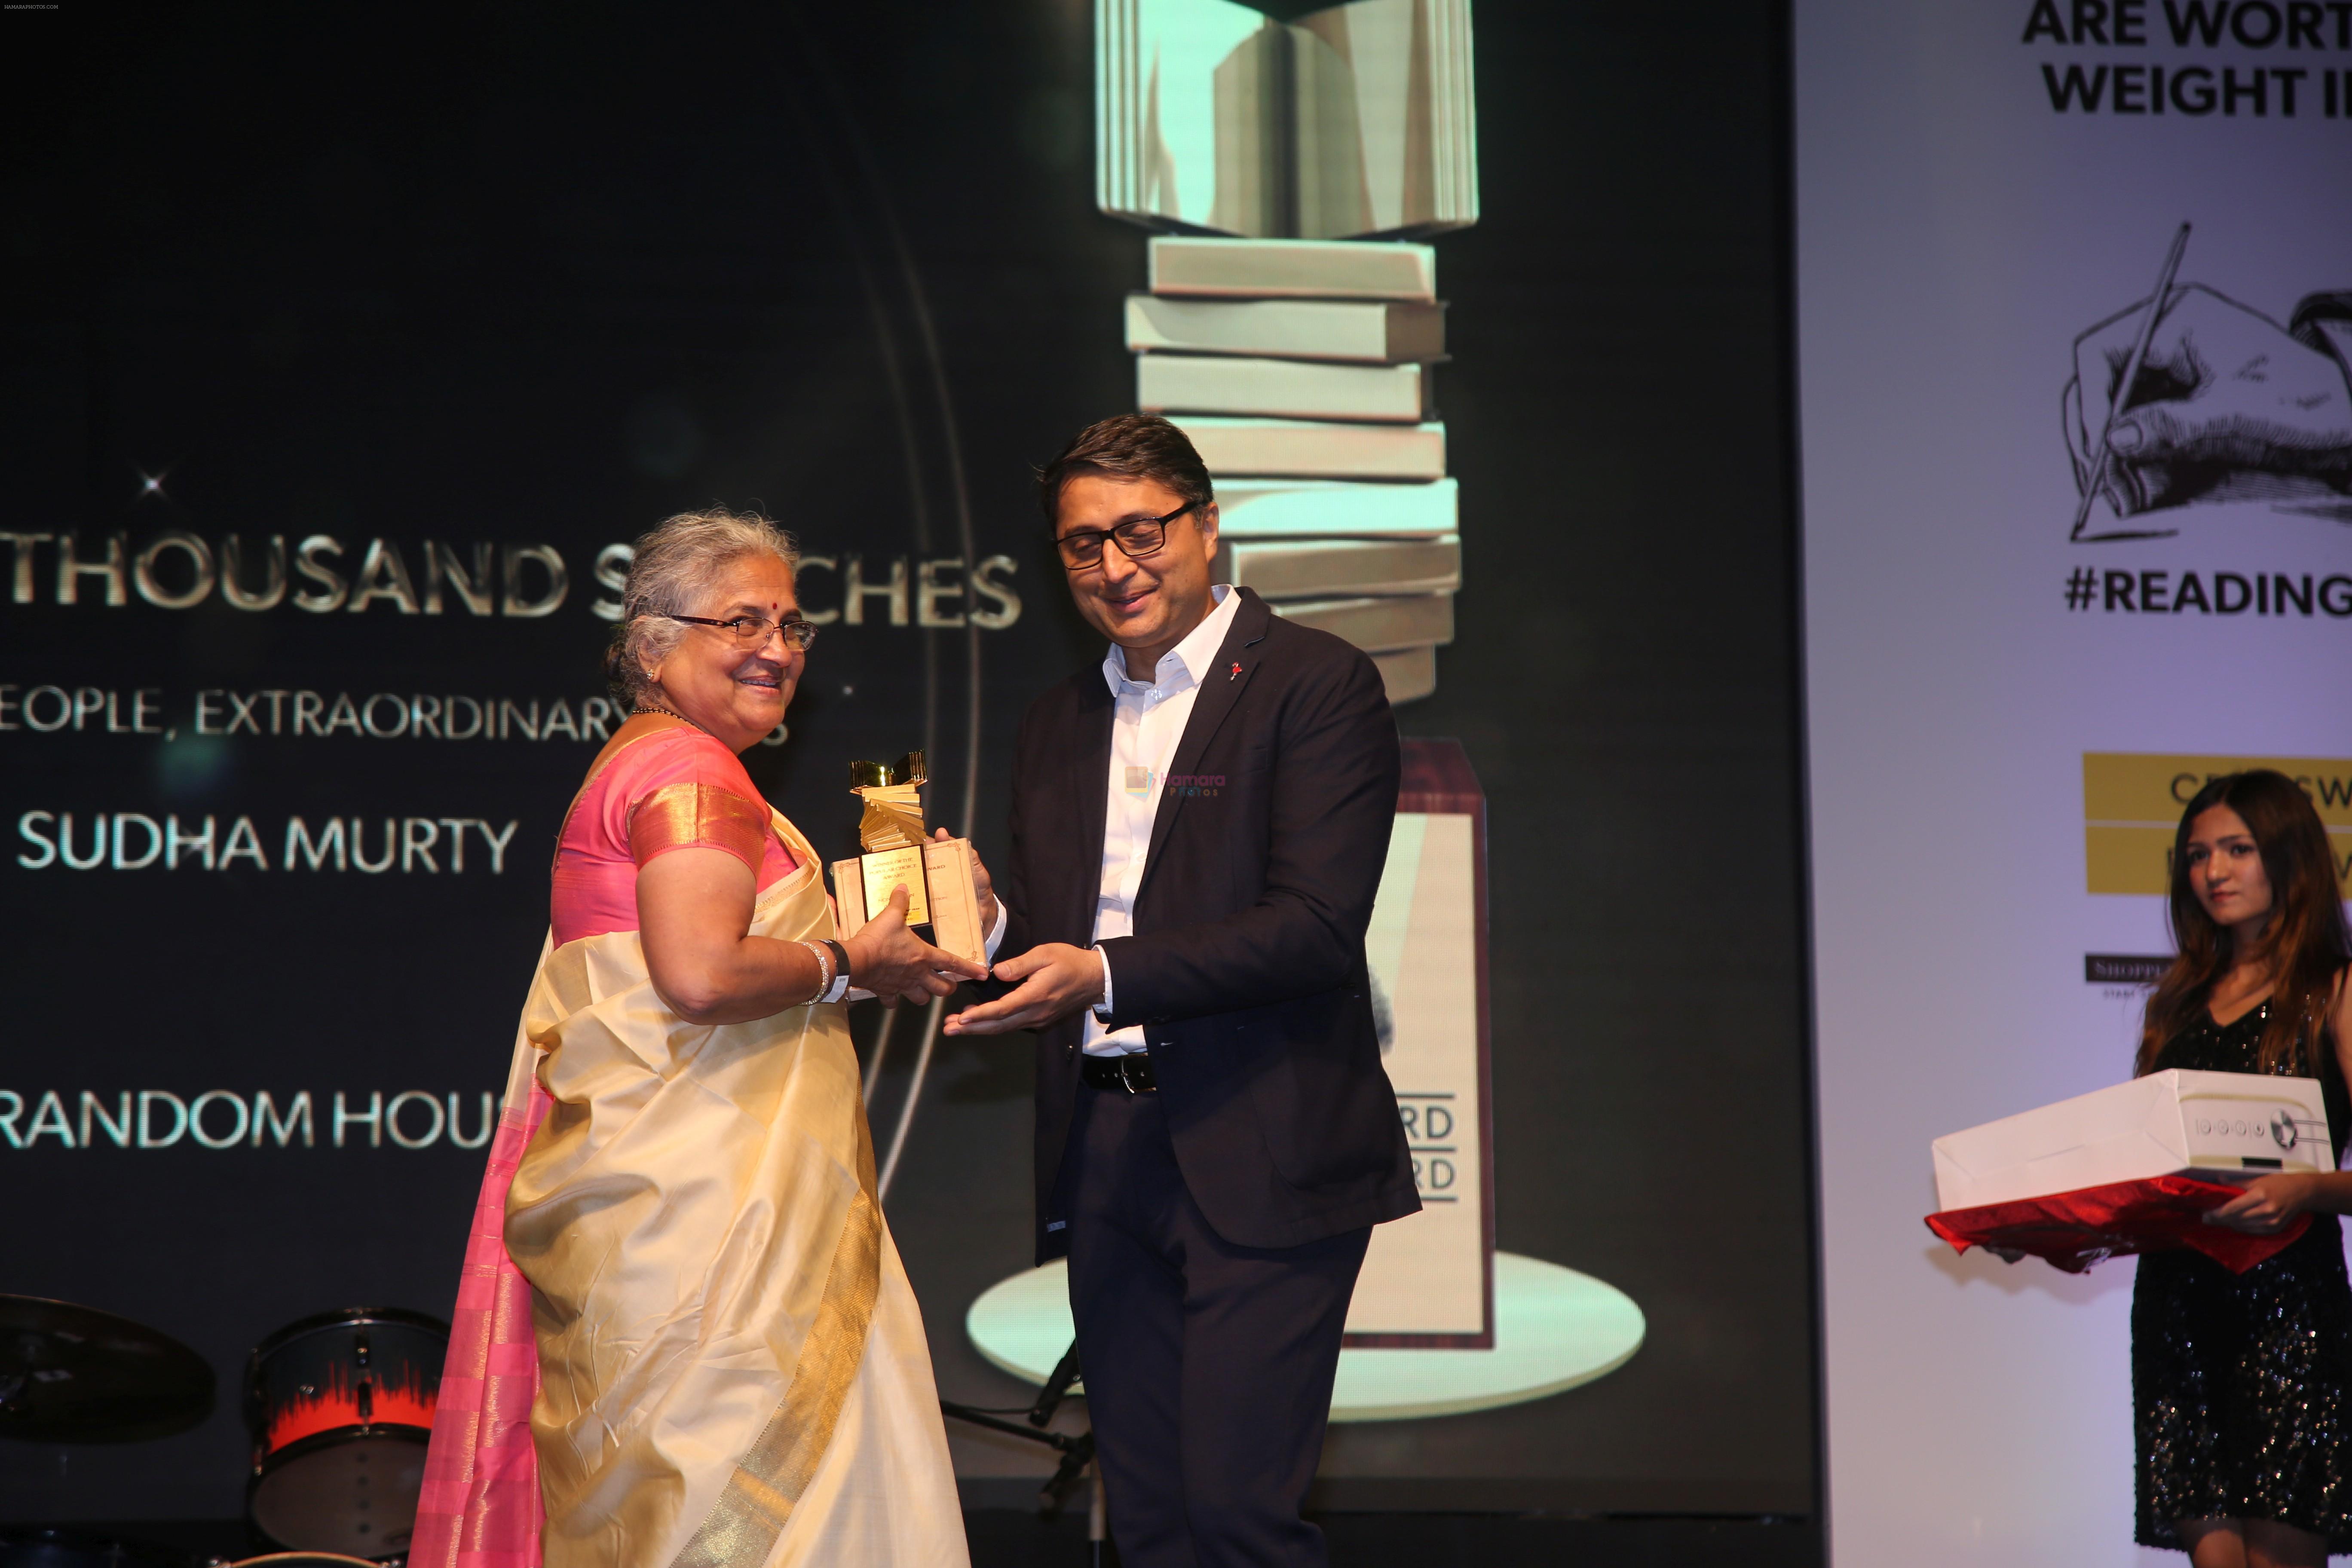 Sudha Murthy at the Crossword Book Awards in Royal Opera House, Mumbai on 21st Dec 2018